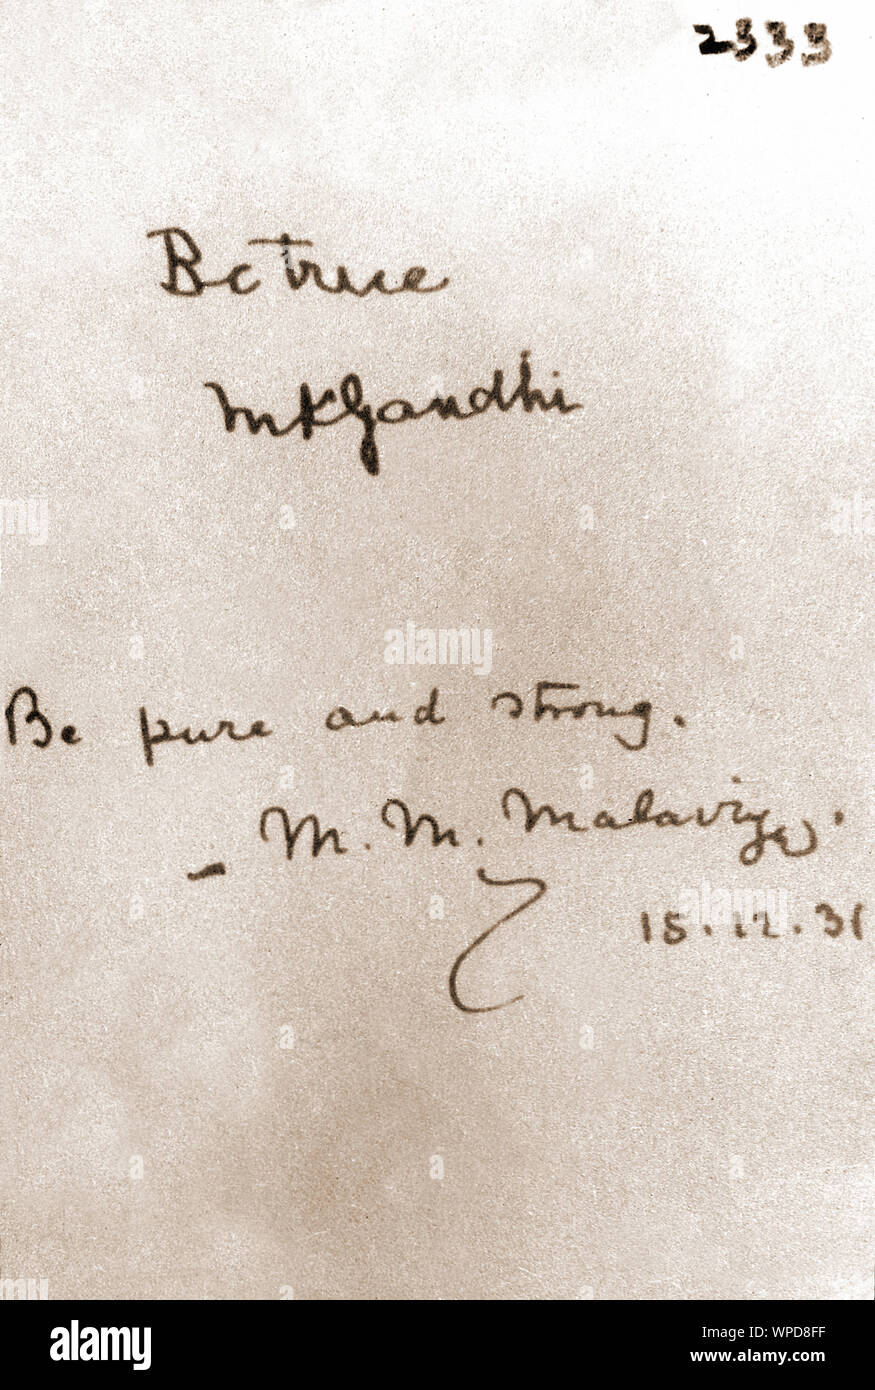 Handwritten messages by Mahatma Gandhi and Madan Mohan Malaviya, India, Asia, December 15, 1931 Stock Photo